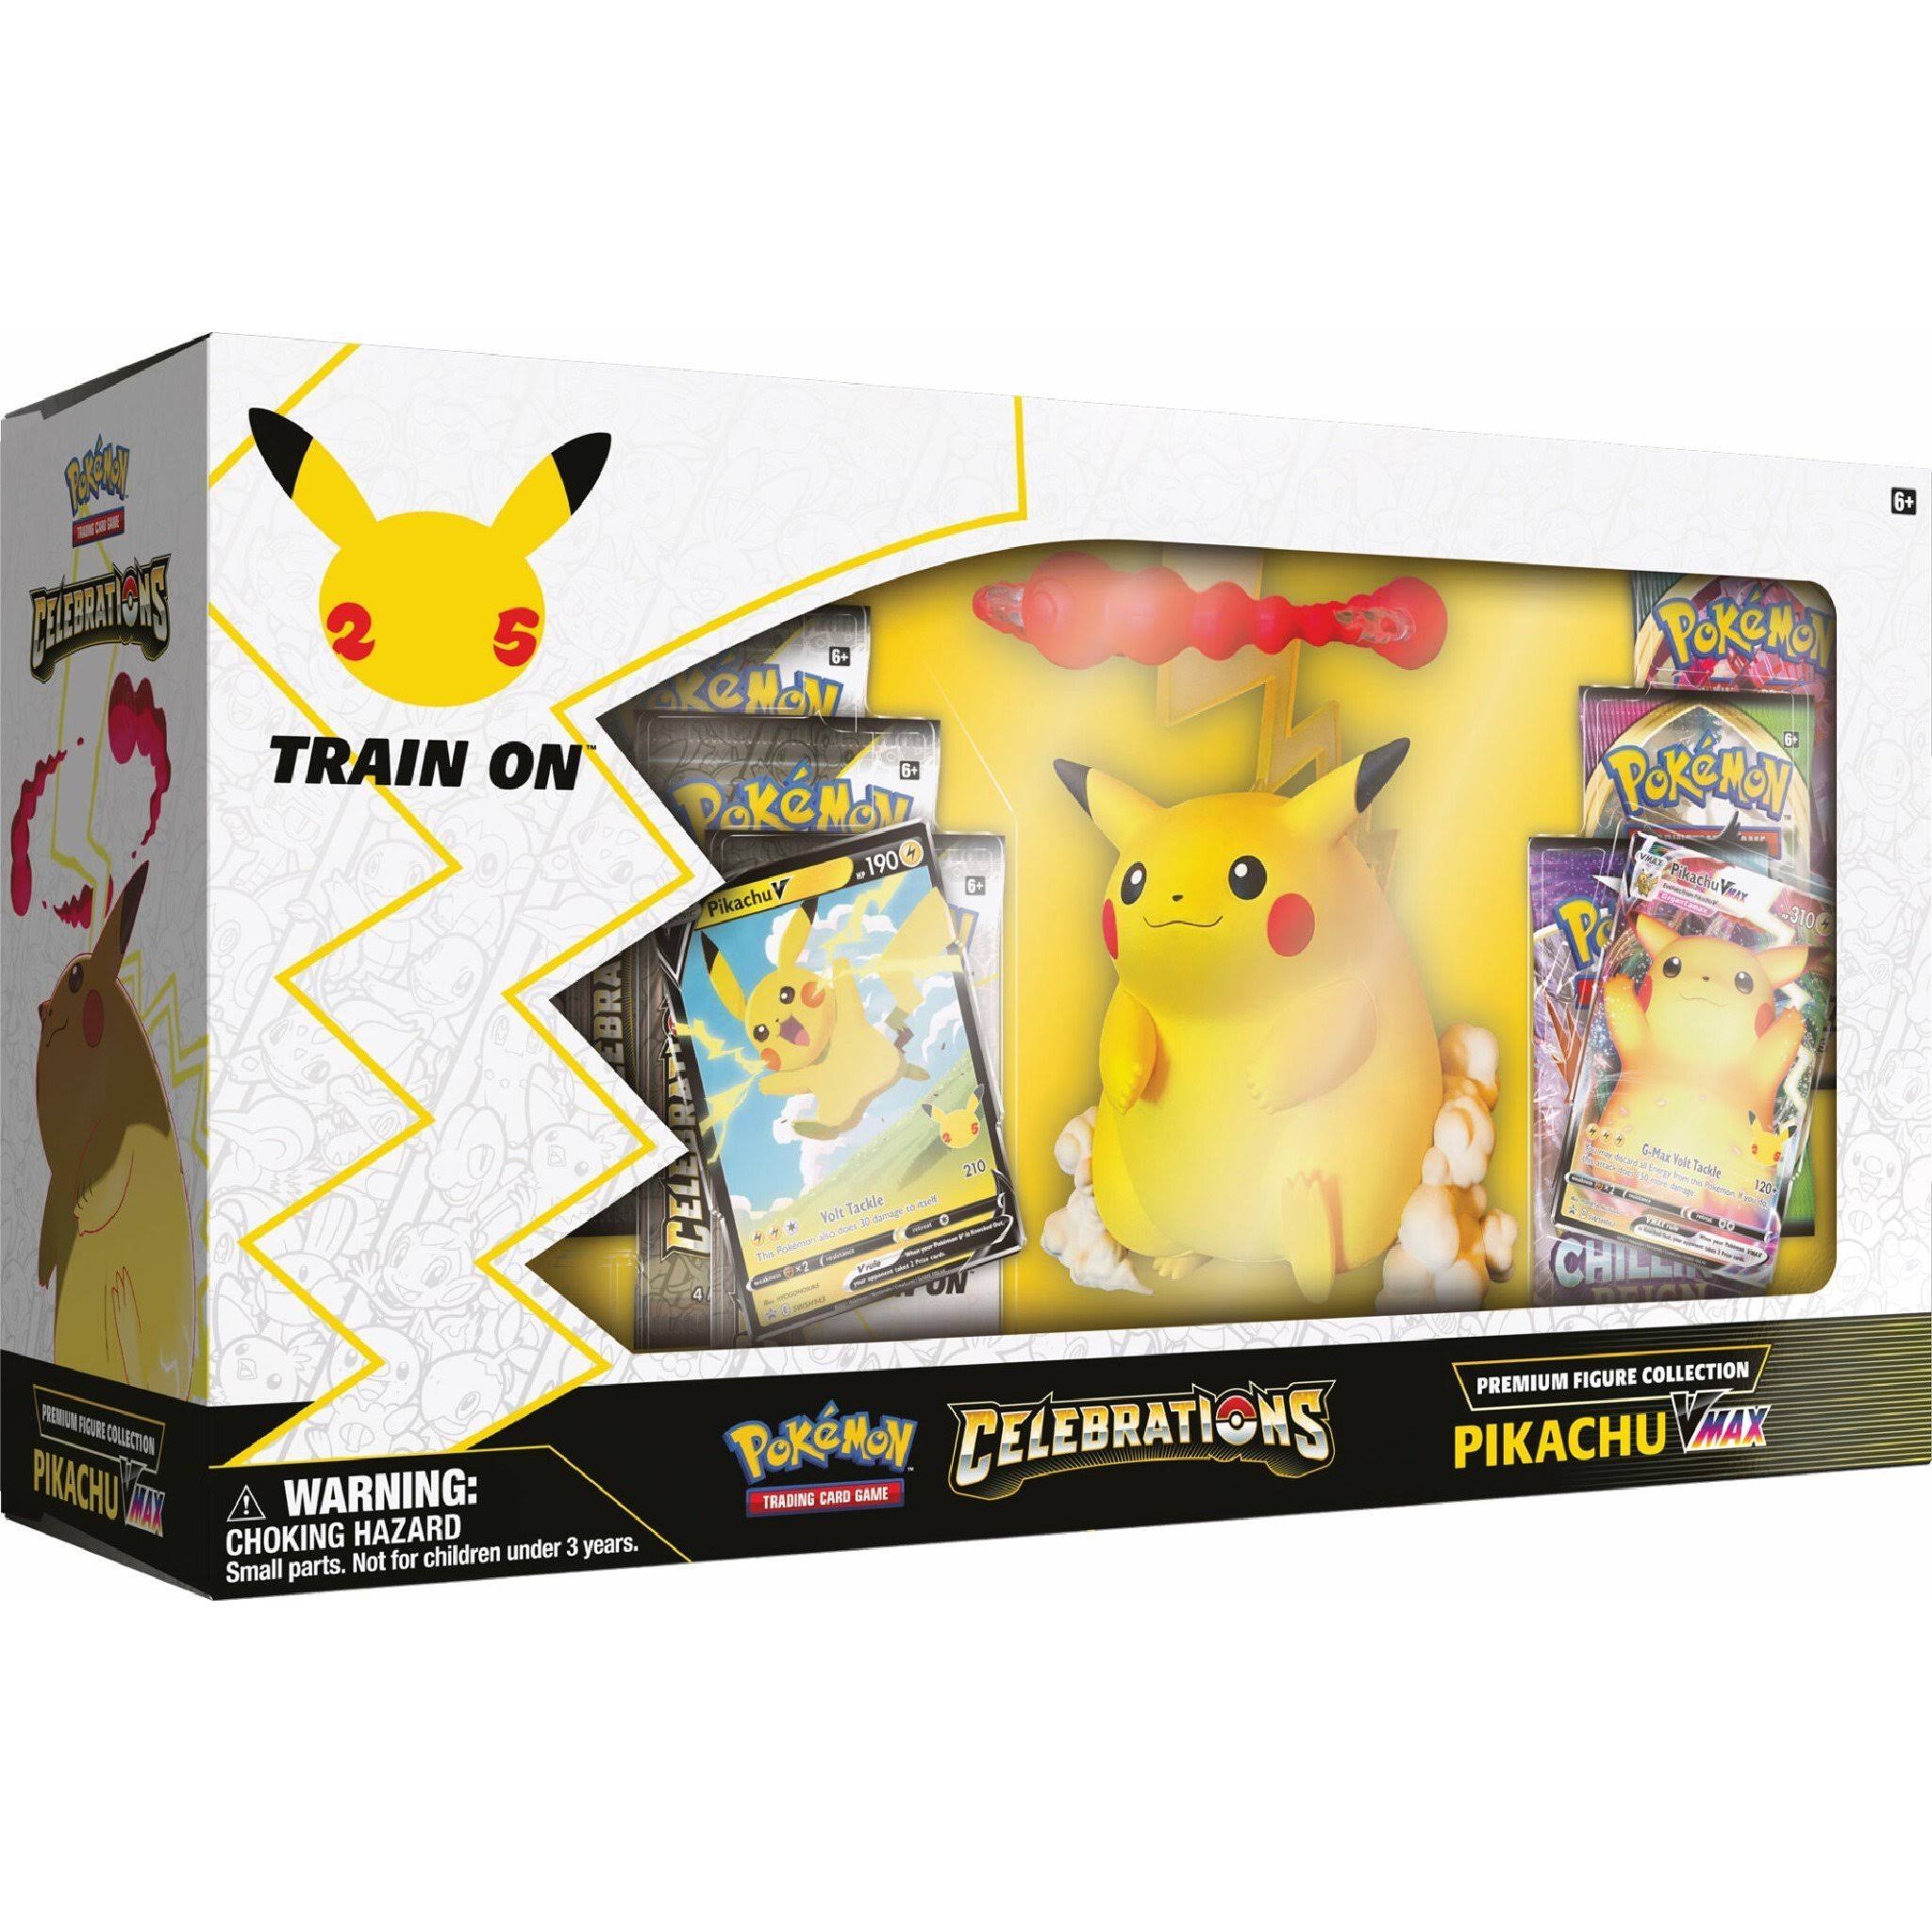 Pokemon Tcg: Celebrations Premium Figure Collection - Pikachu Vmax